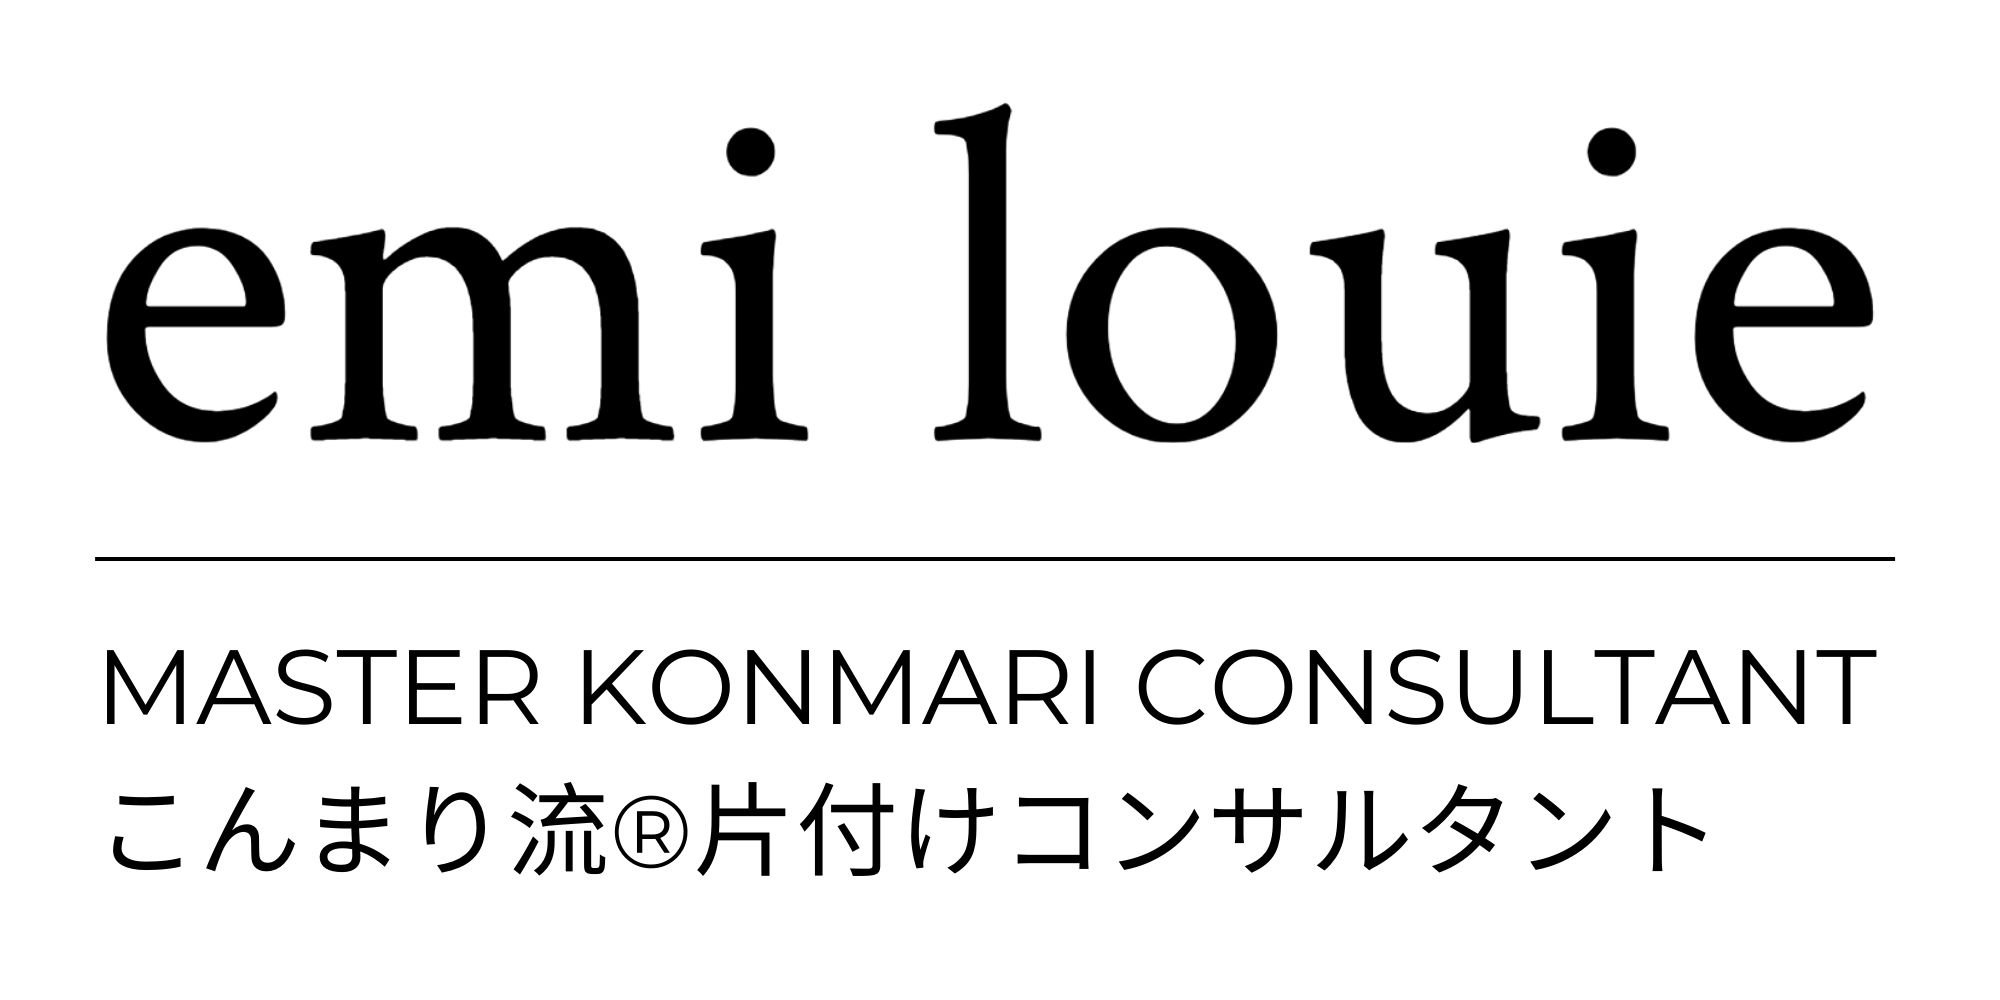 Master KonMari Consultant + Professional Organizer  |  Kanazawa + Tokyo + San Francisco  |  Emi Louie